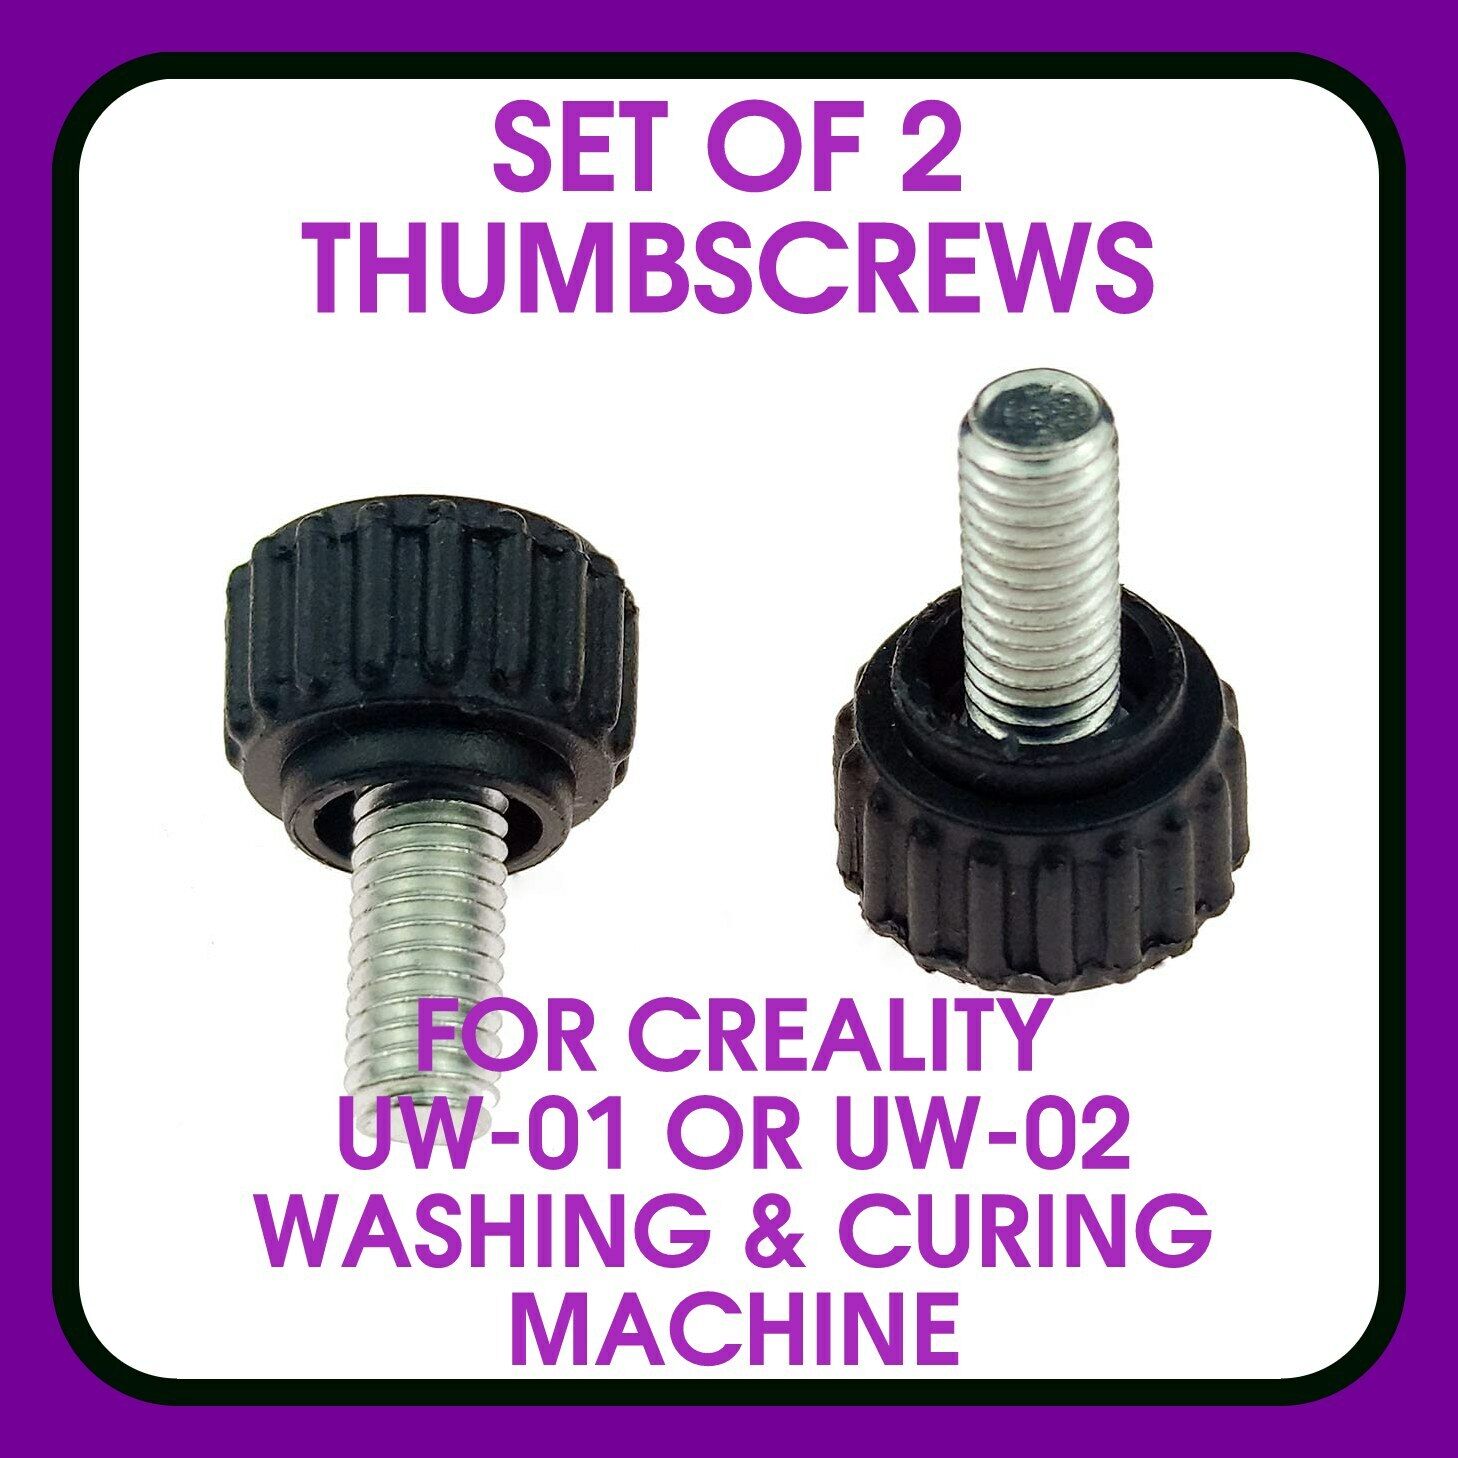 THUMBSCREW SET OF 2 FOR CREALITY UW-01/UW-02 3D PRINTER WASHING & CURING MACHINE